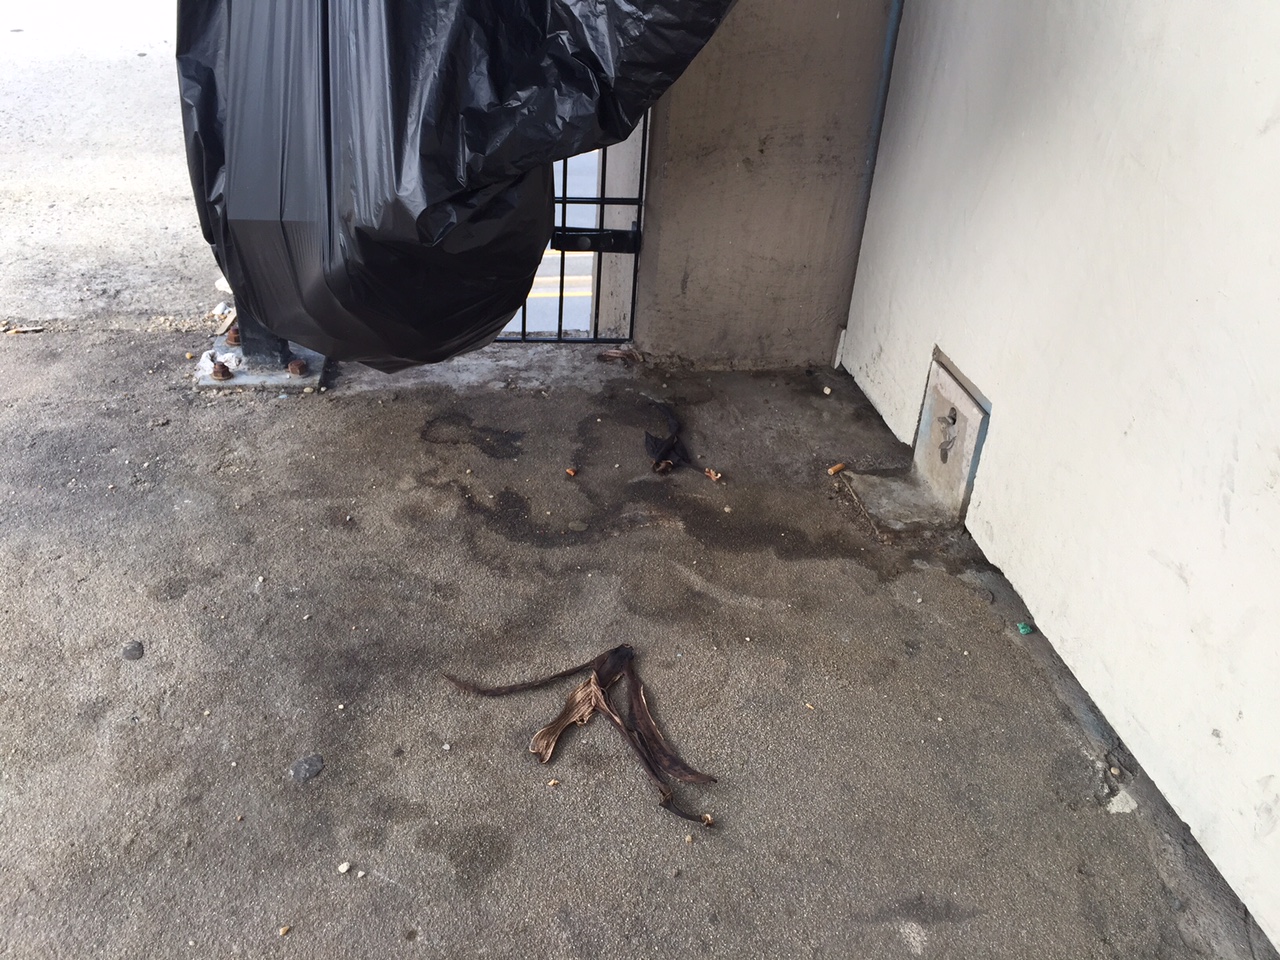 A trash bag goes unused near a suspicious stain near the bridge. (WTOP/Kristi King)